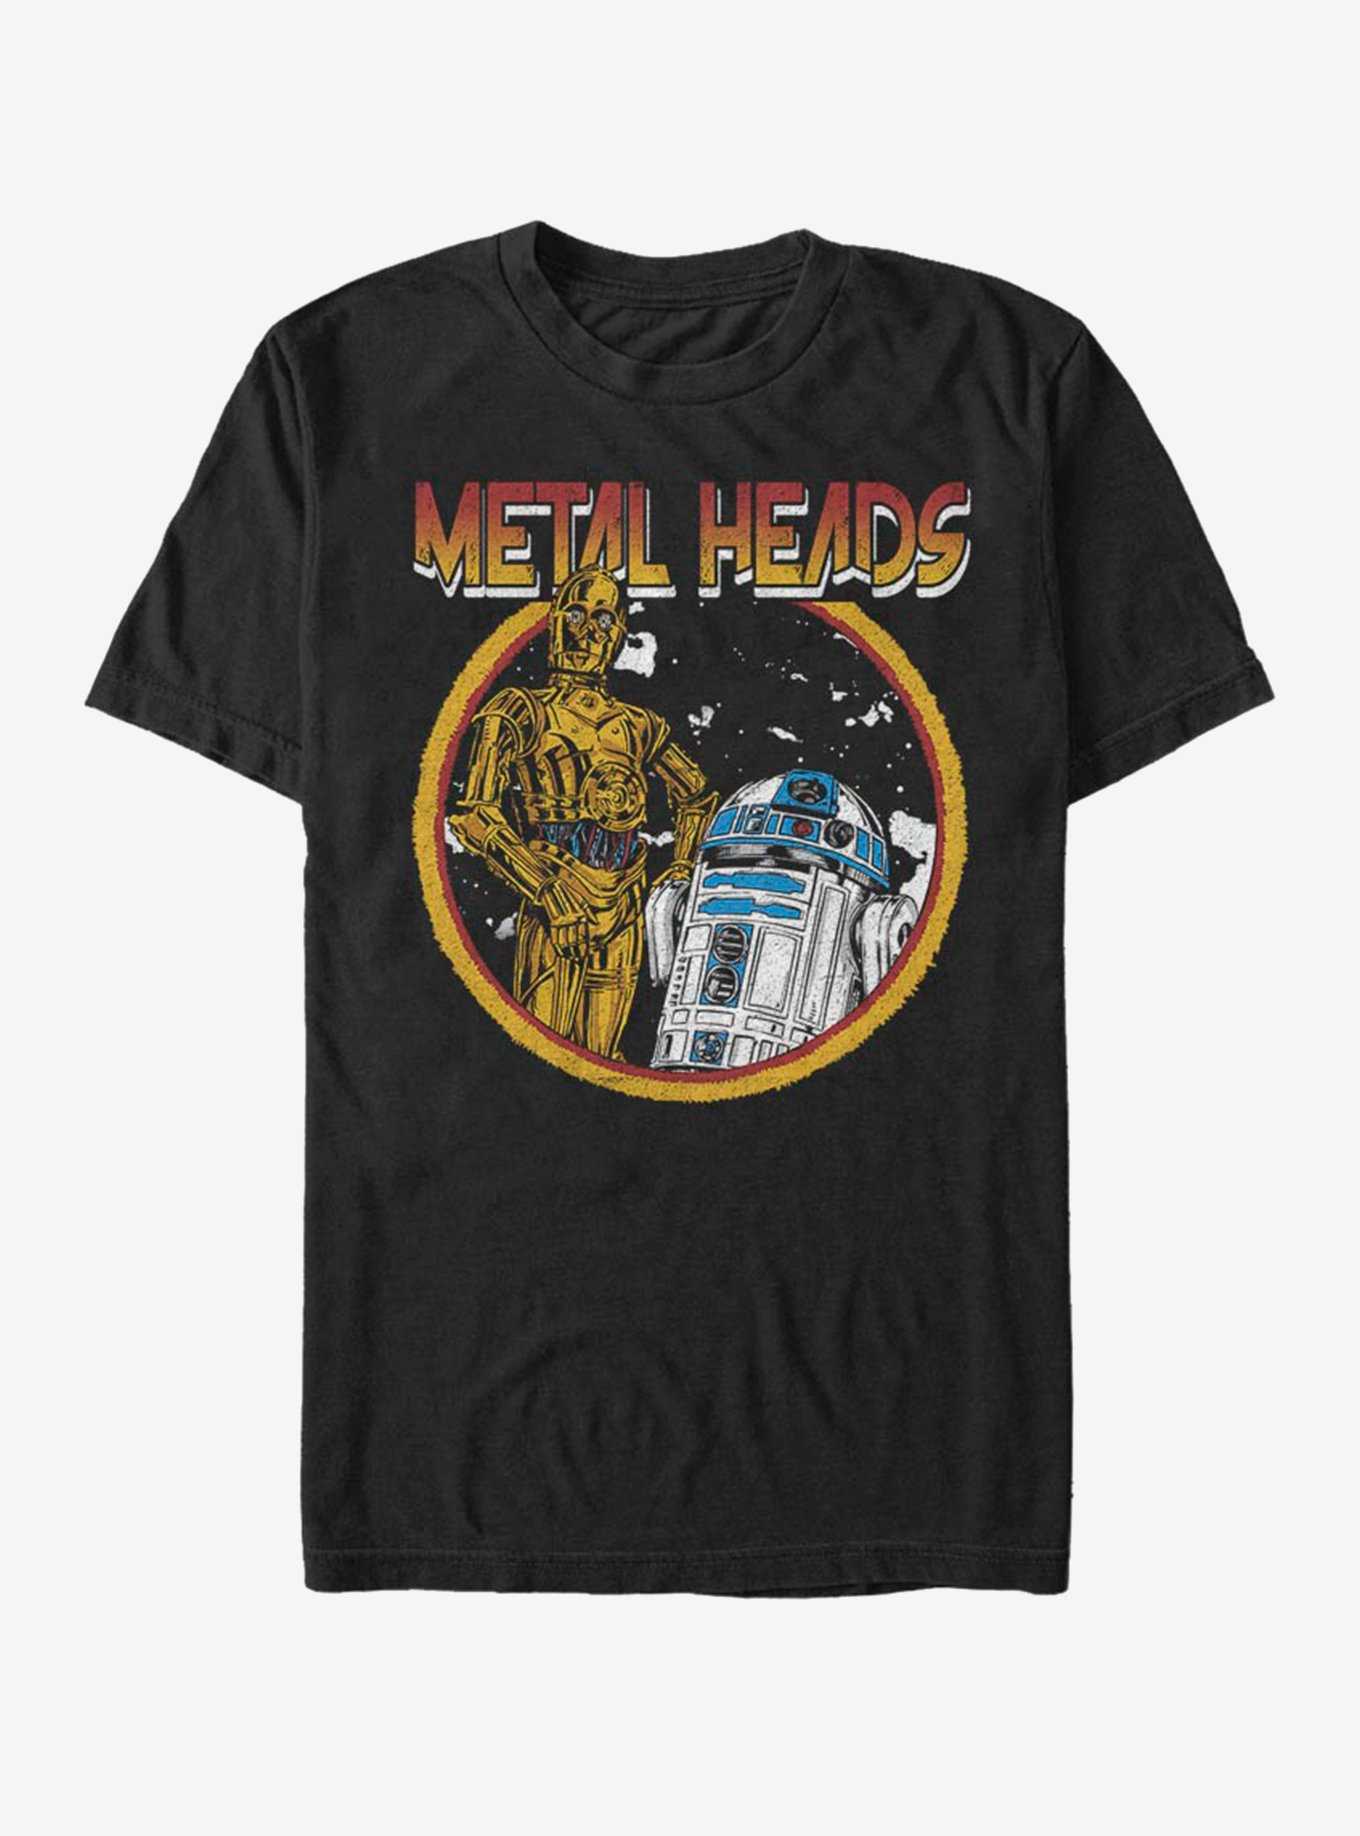 Star Wars Metal Droids T-Shirt, , hi-res